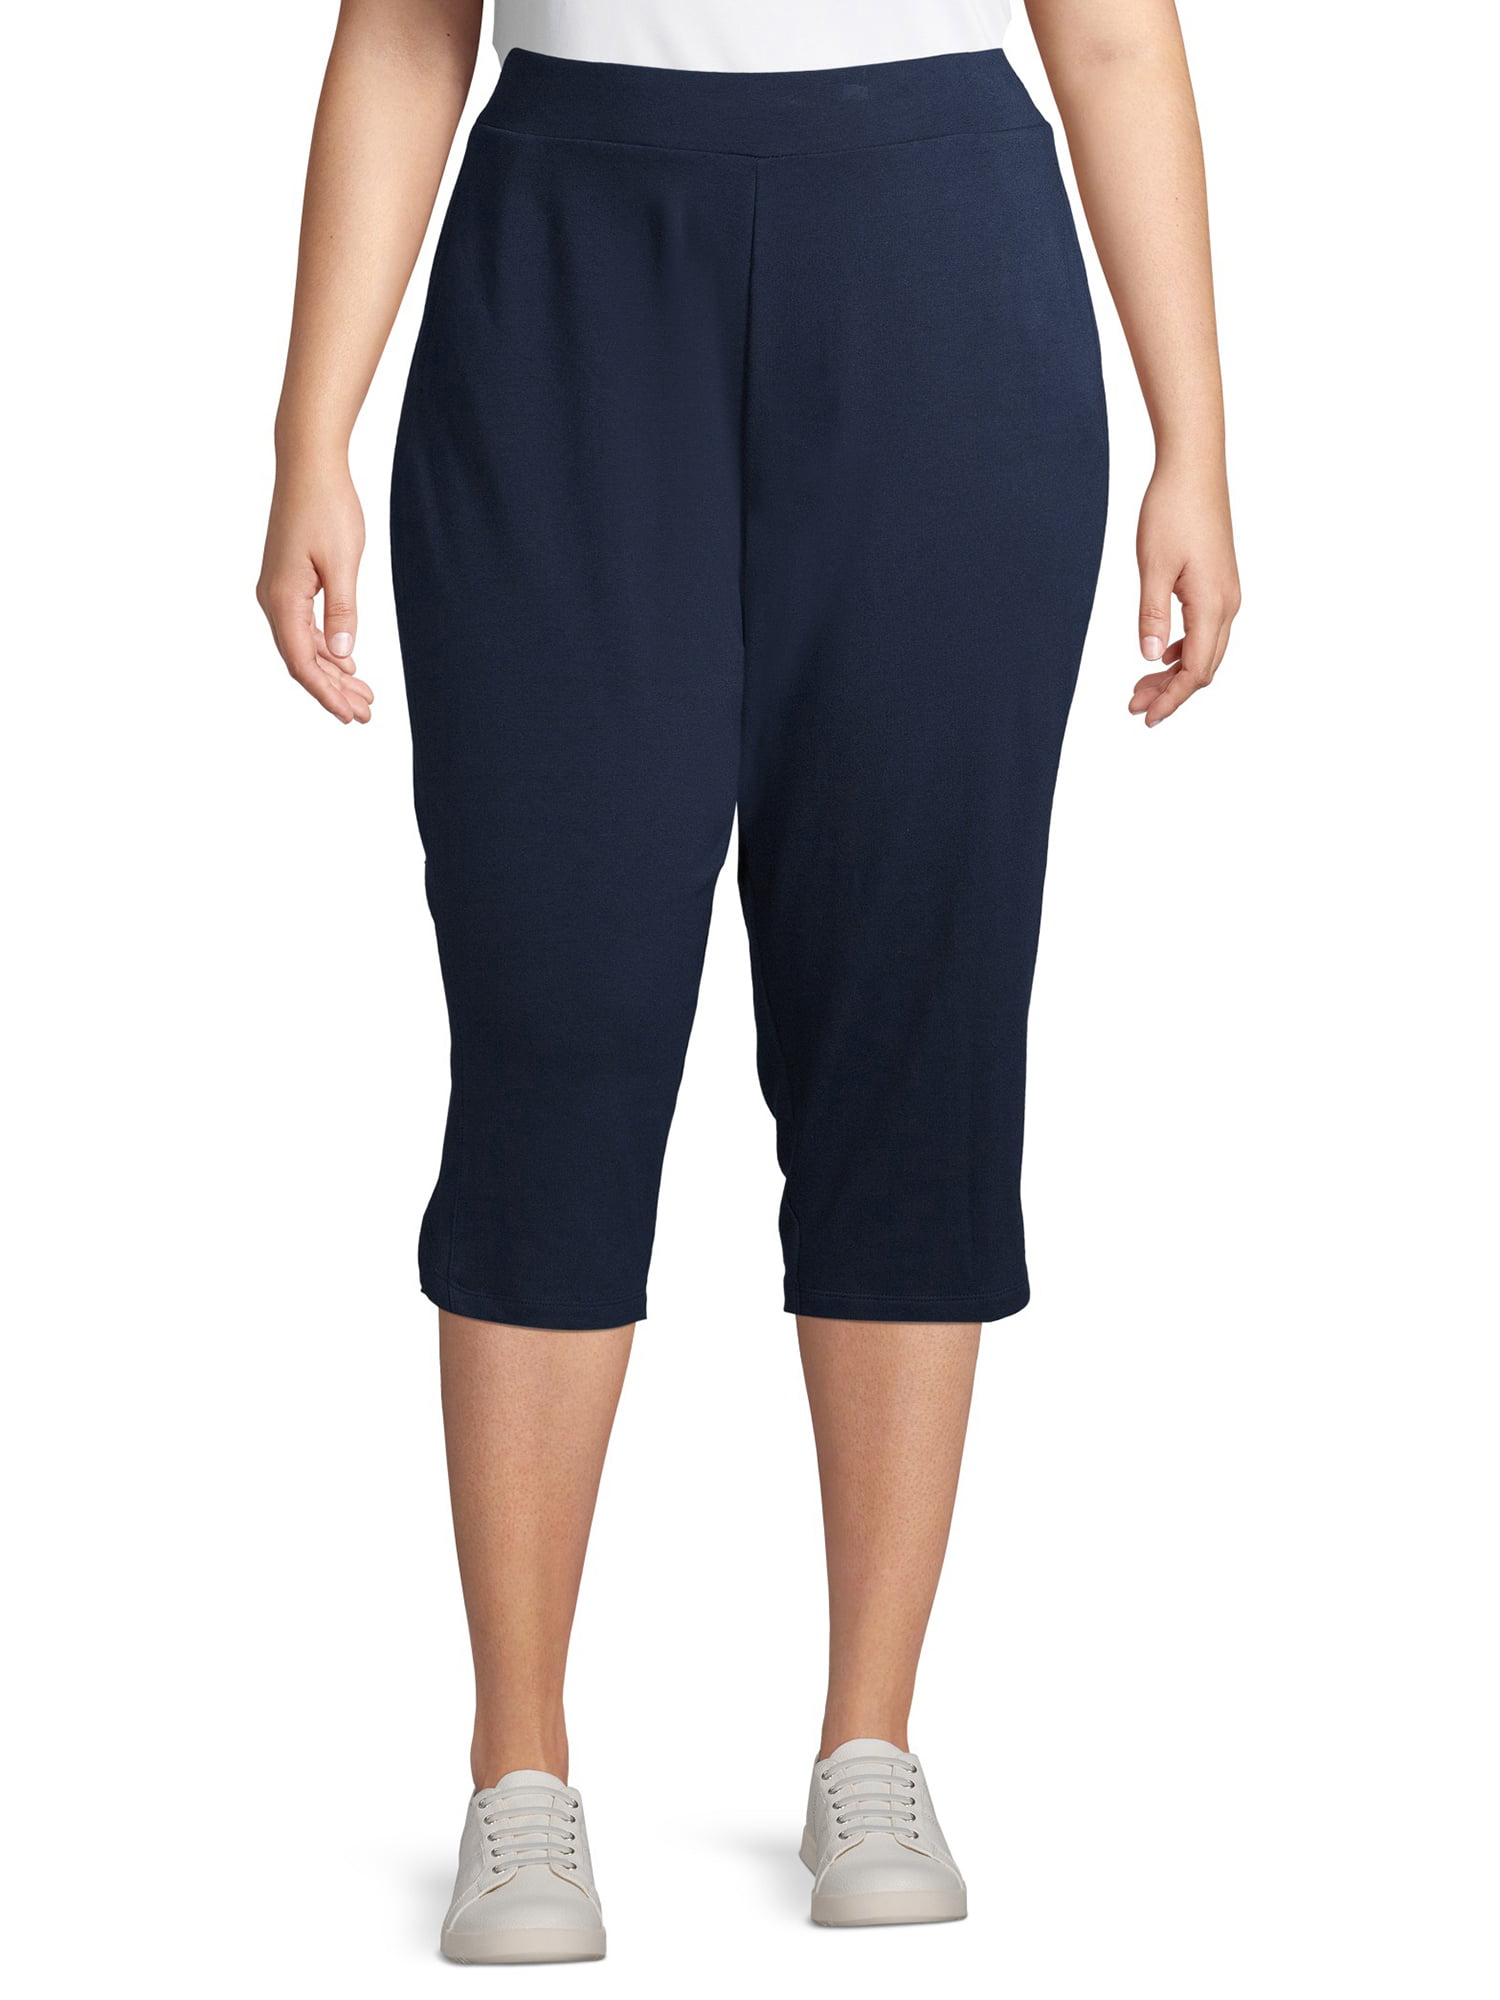 Terra & Sky Women's Plus Size Knit Capri 